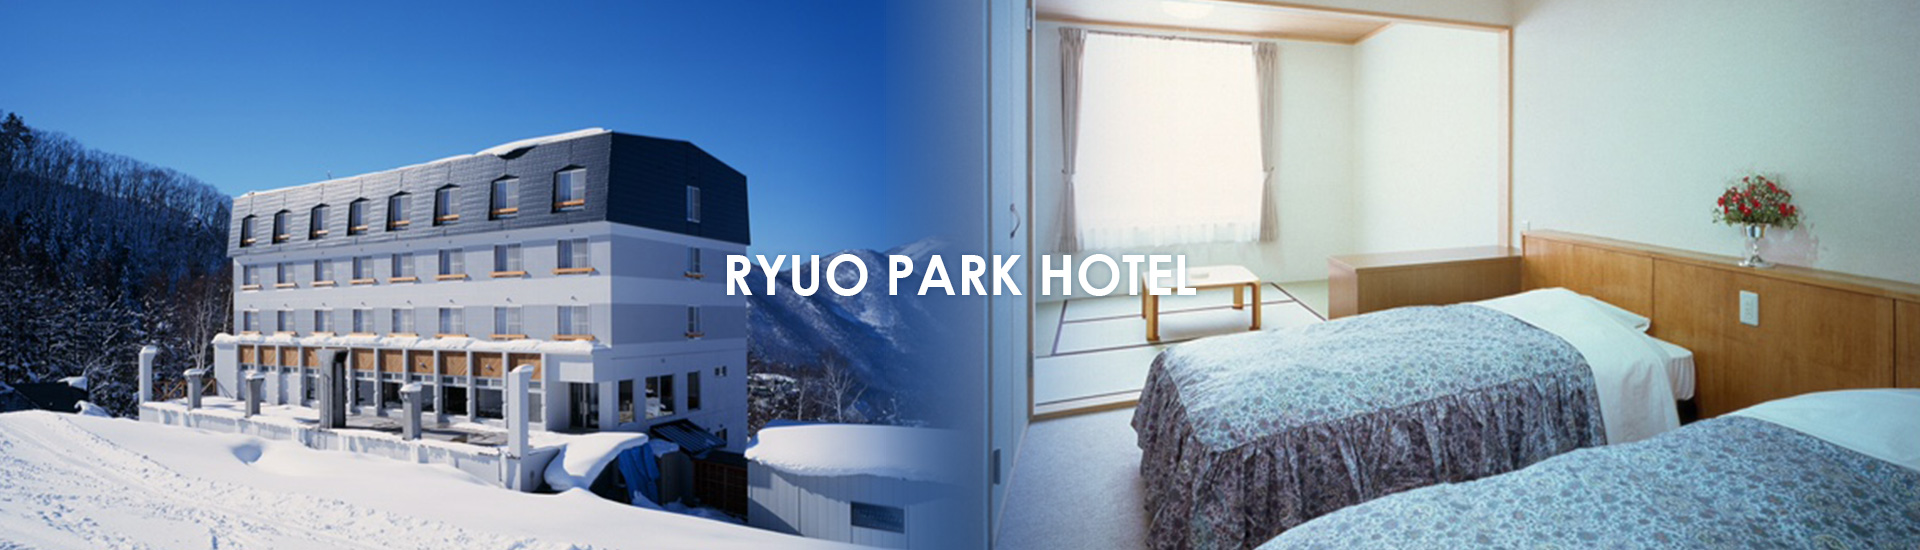 RYUO PARK HOTEL